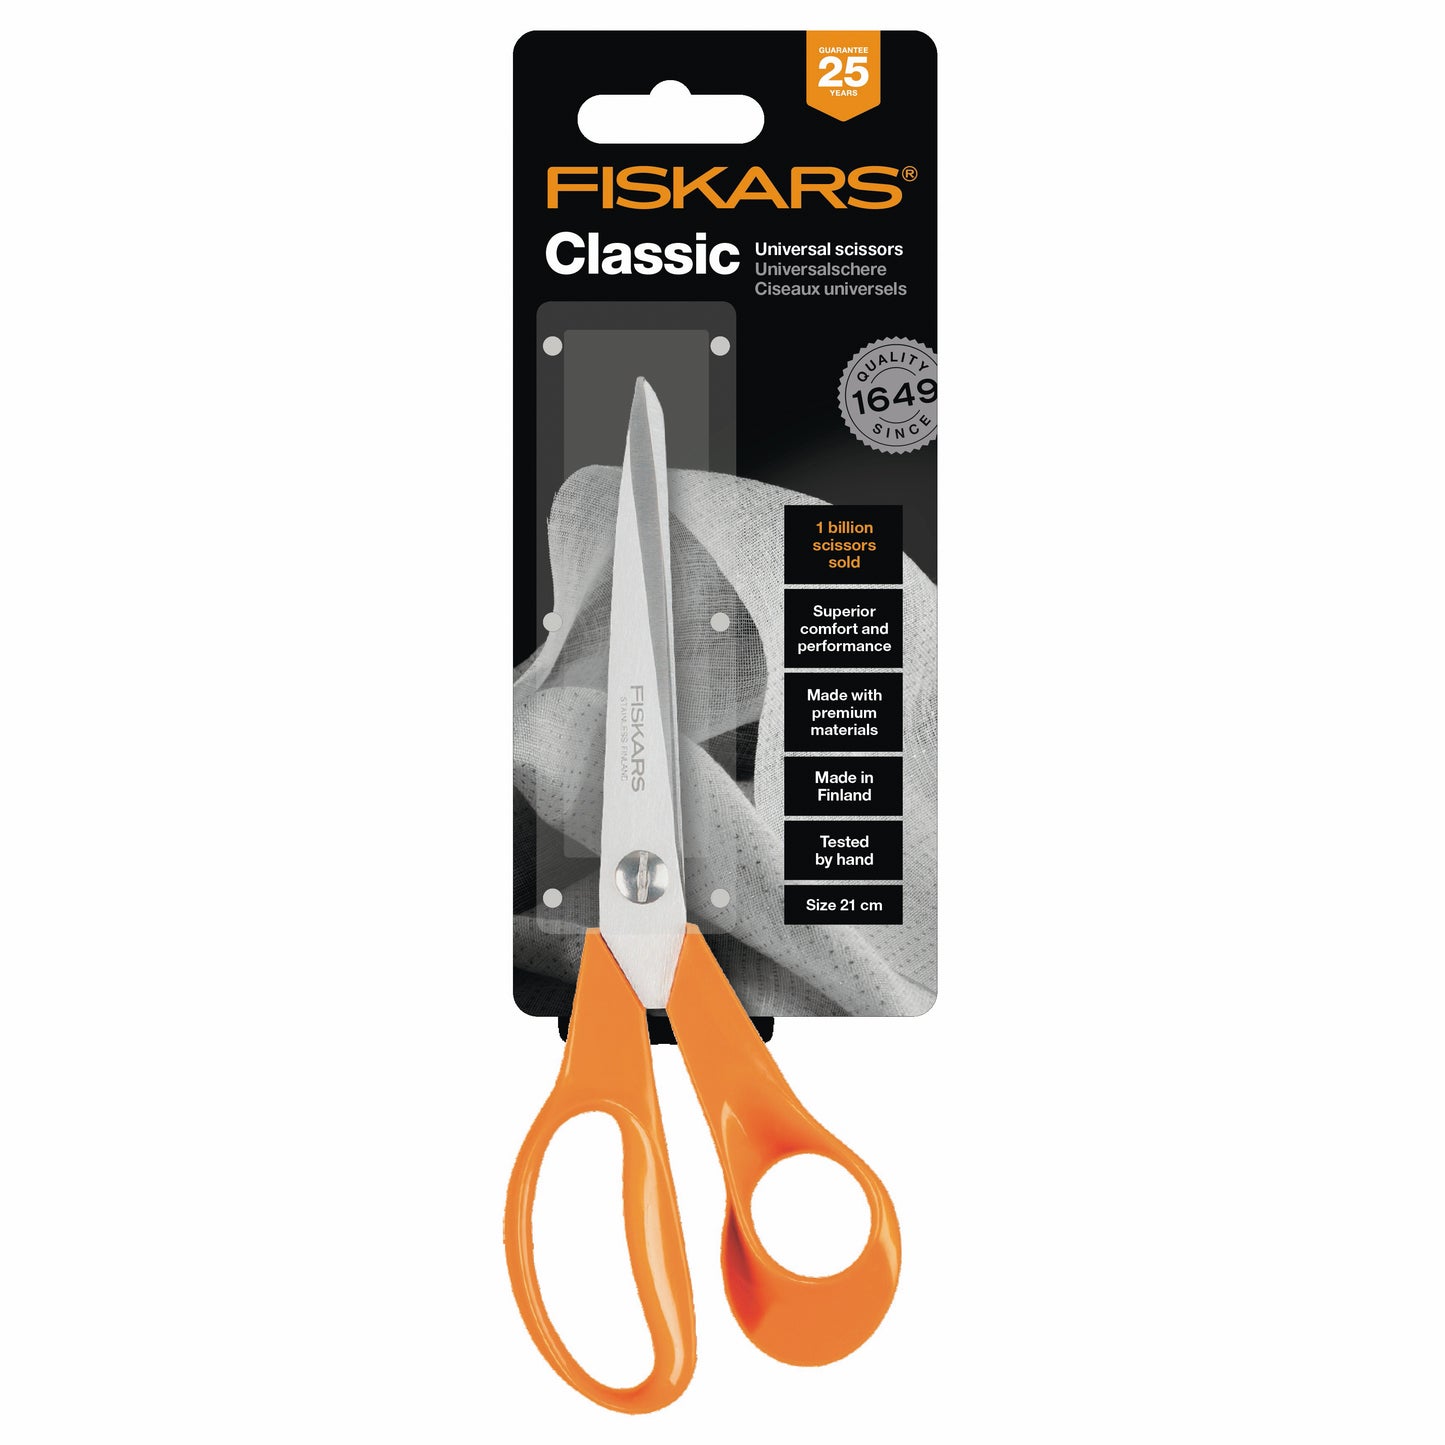 Fiskars Classic Universal Scissors - 21cm or 8.25 inches